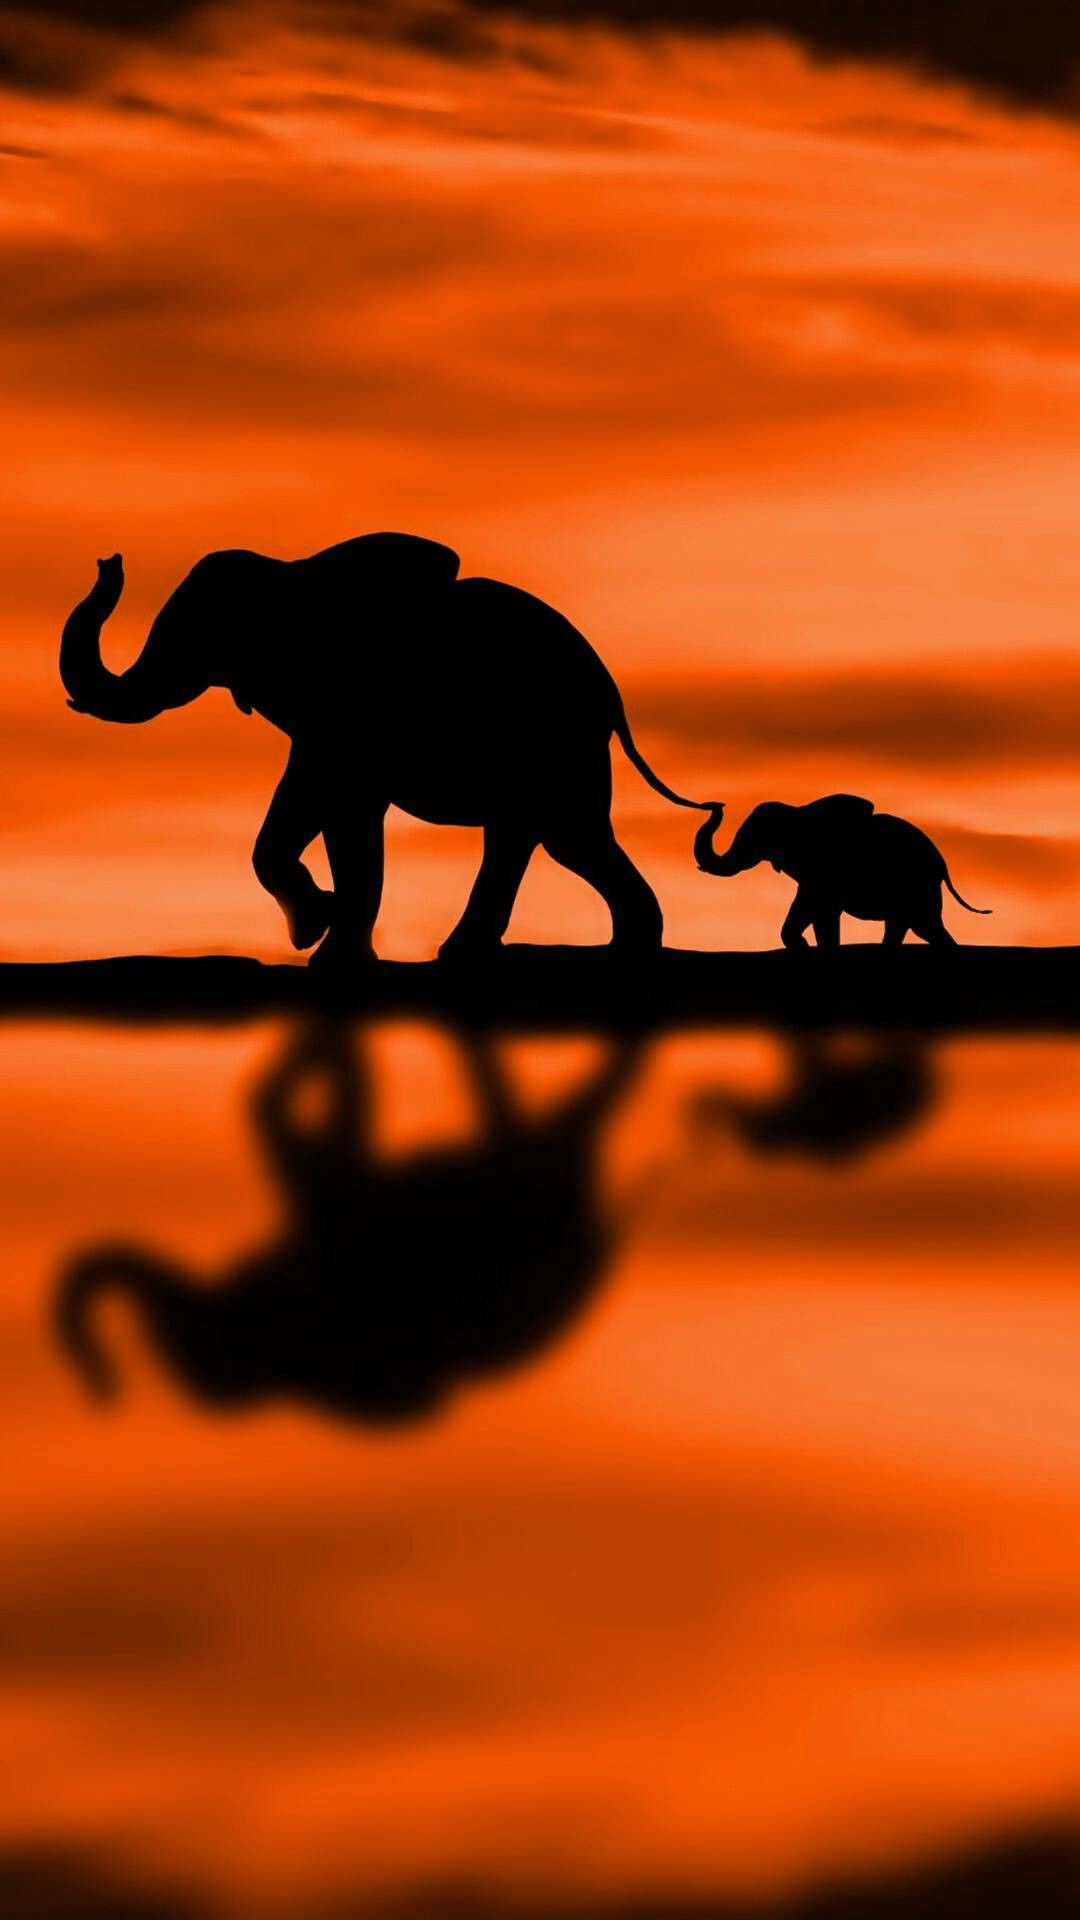 Background Elephant Wallpaper